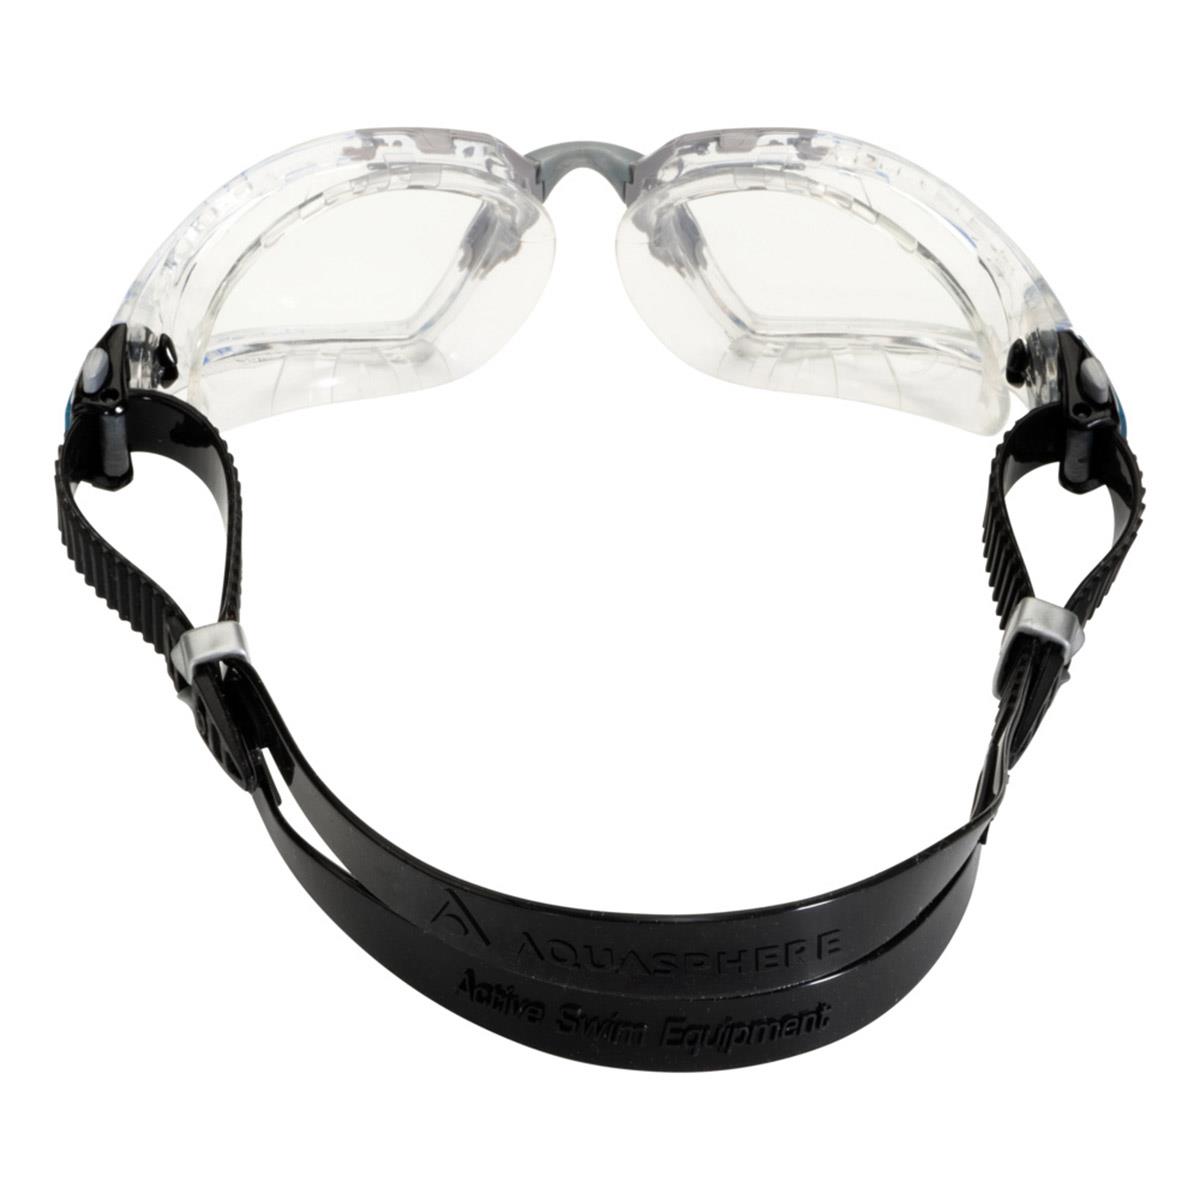 Aquasphere Kayenne Pro Clear Lens Goggles - Grey / Black